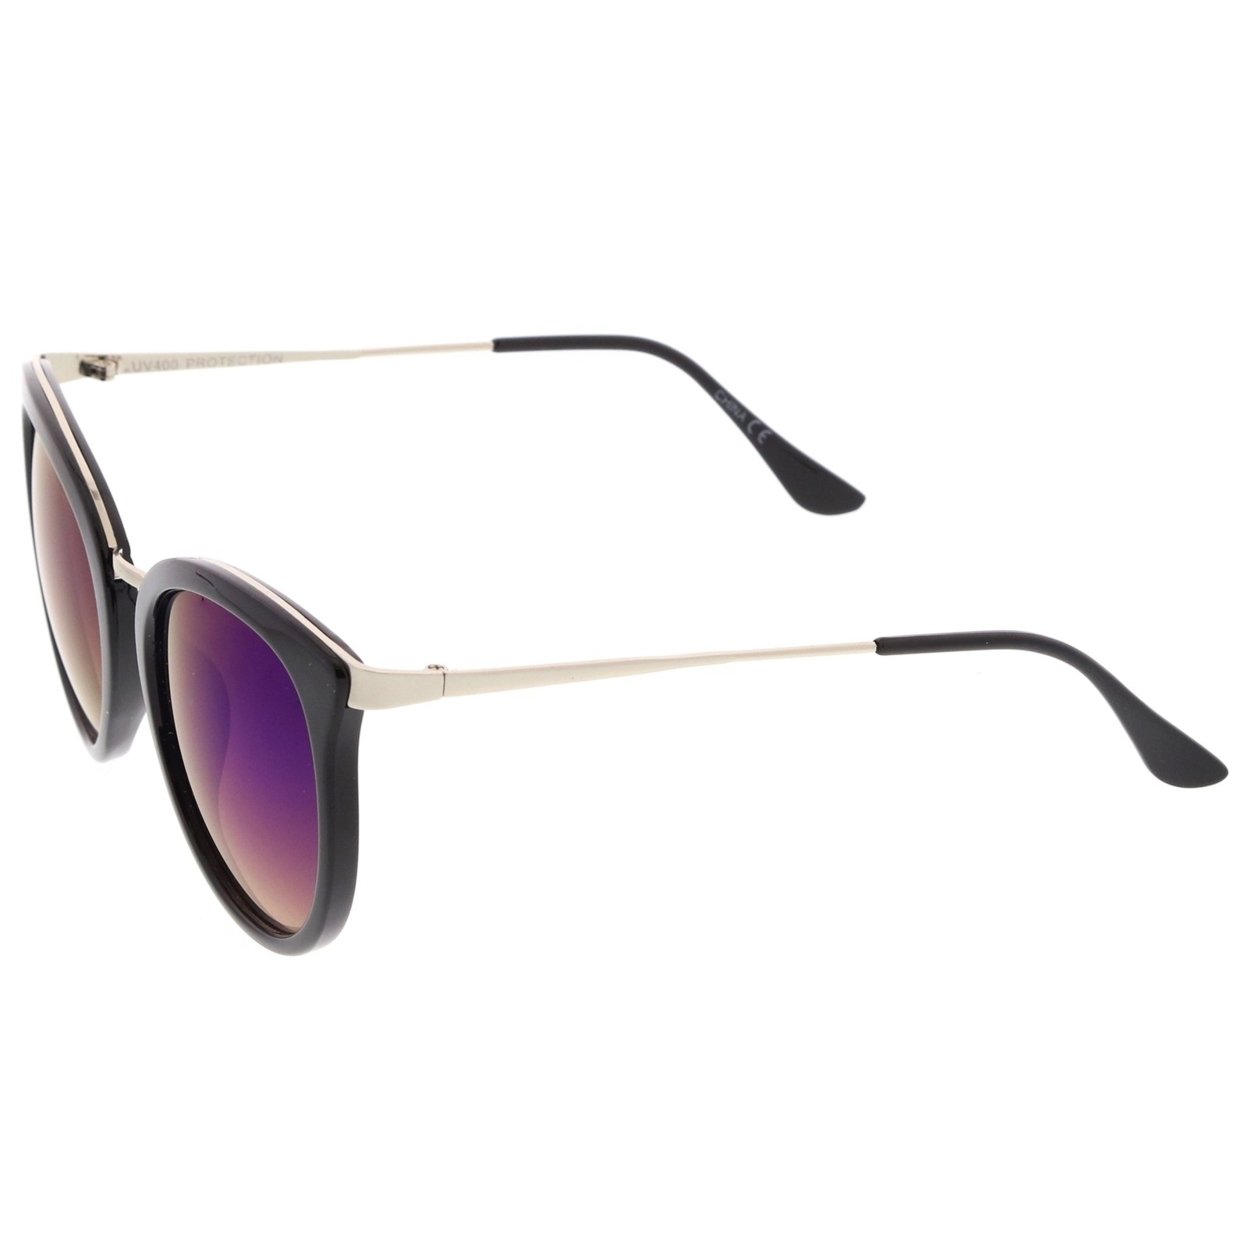 Modern Slim Metal Temple Colored Mirror Lens Cat Eye Sunglasses 54mm - Black-Gold / Magenta Mirror